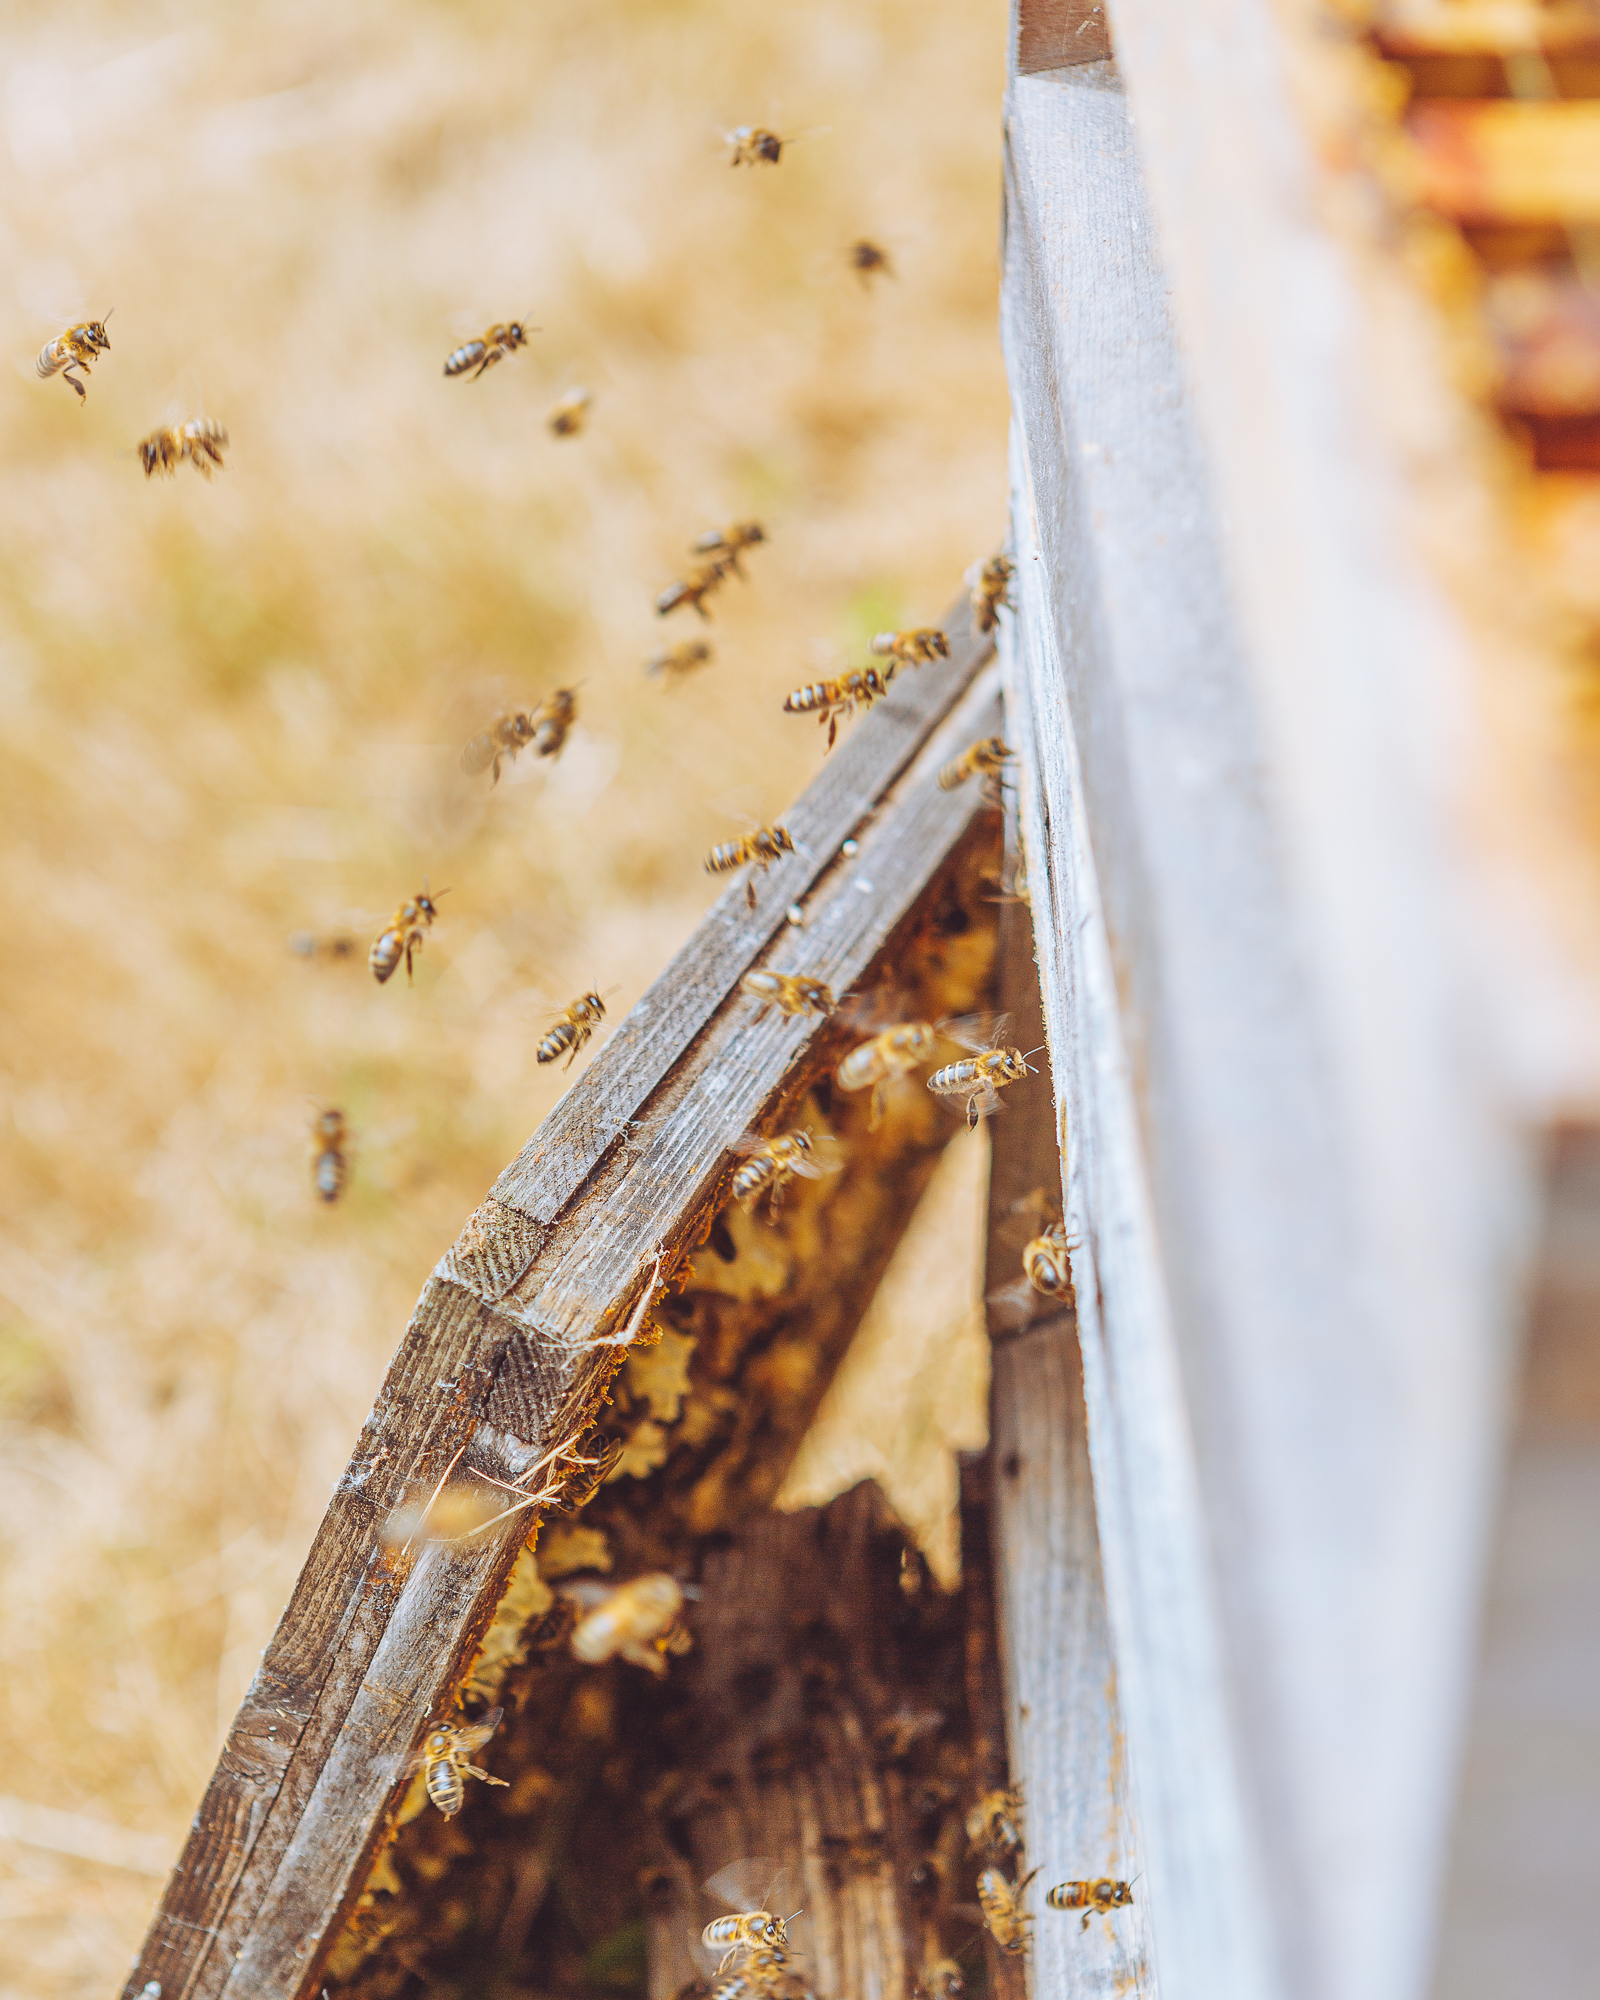 Hives - Bees